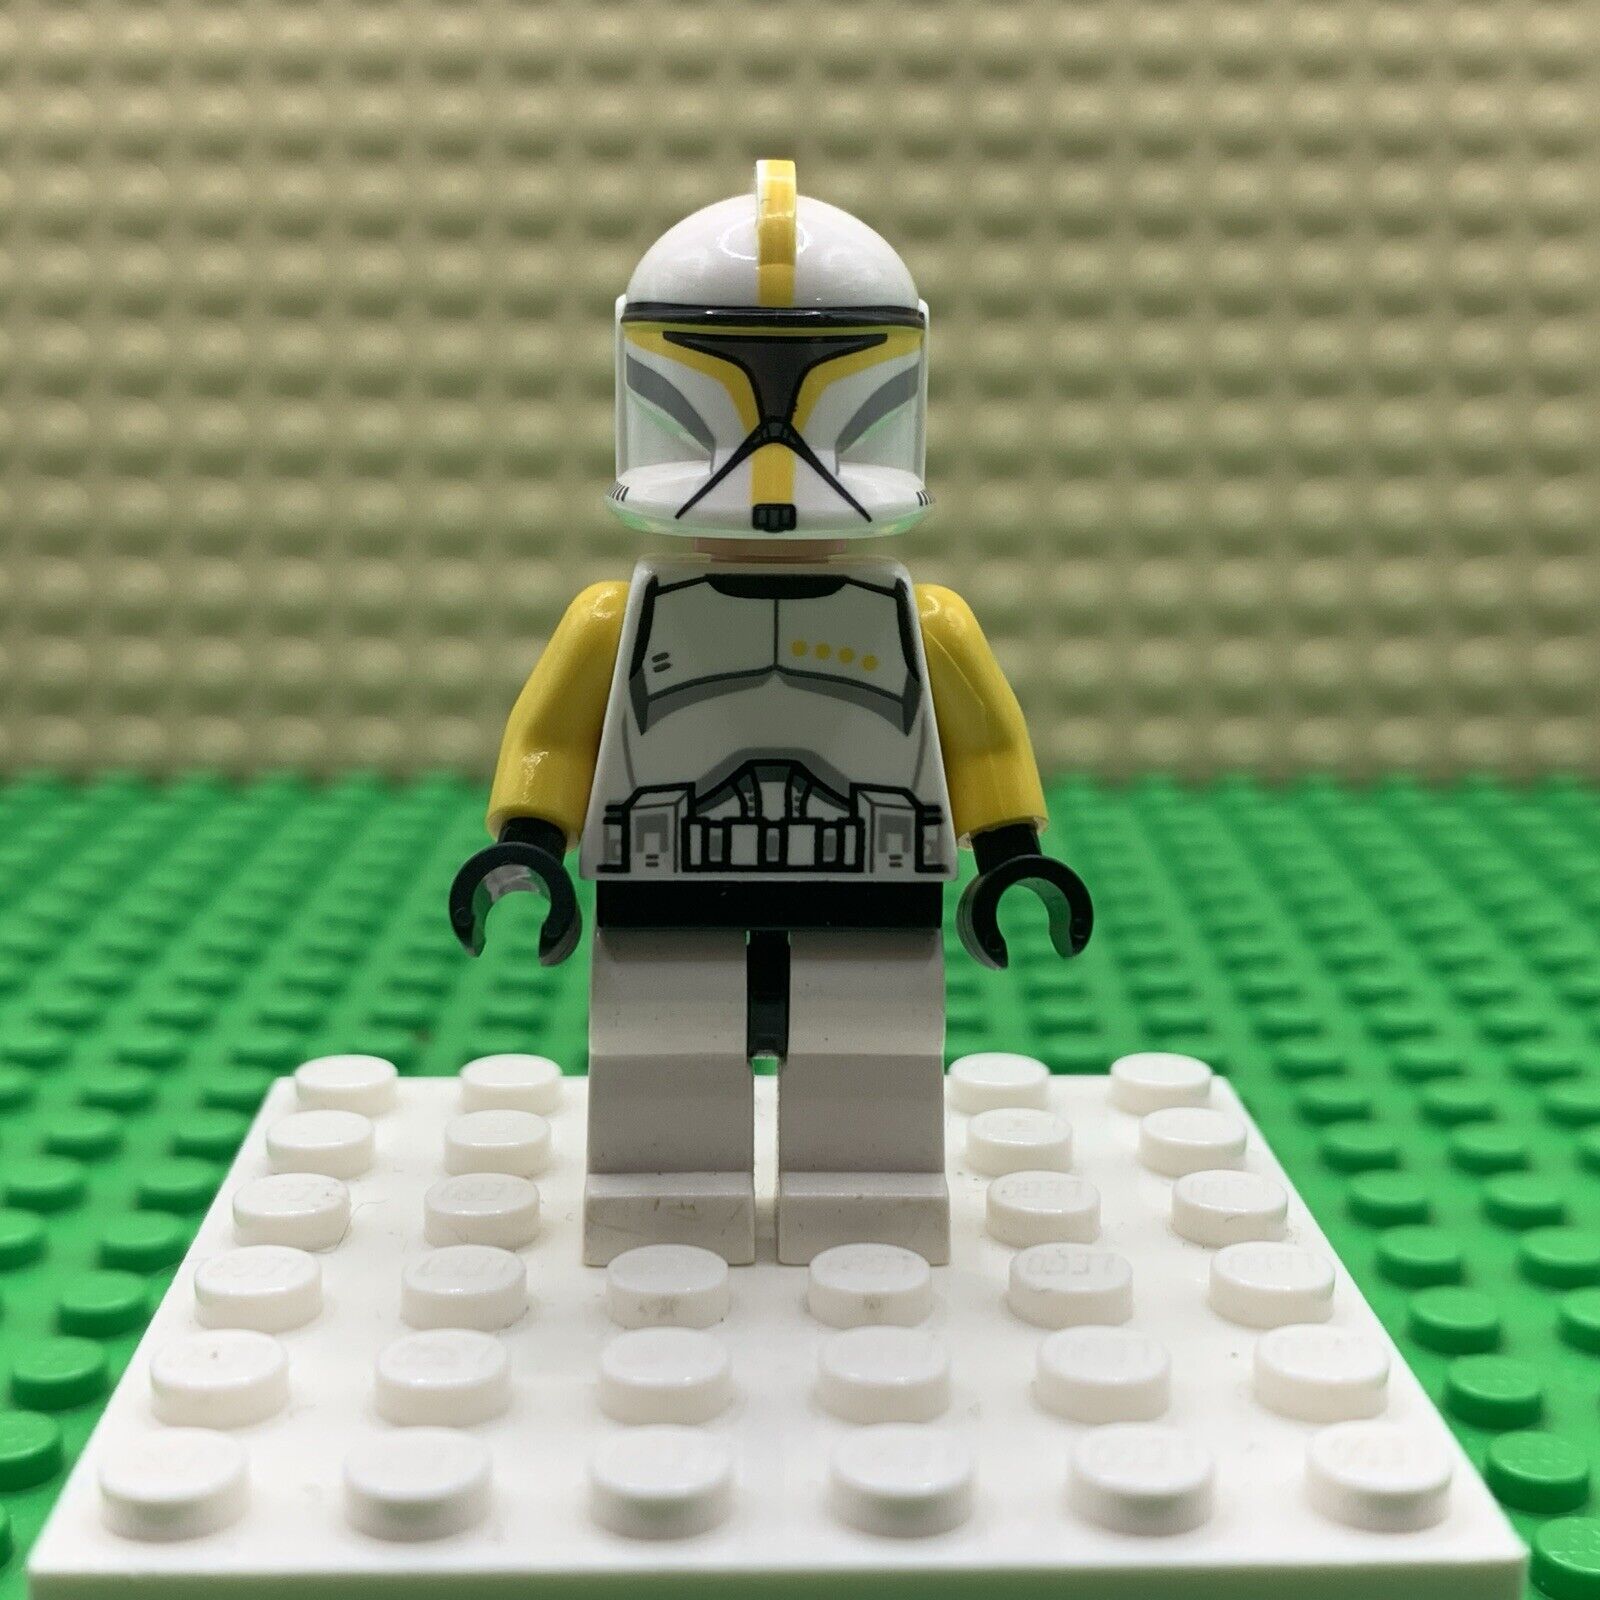 LEGO Star Wars Clone Trooper Commander Minifigure sw0481 2013 75019